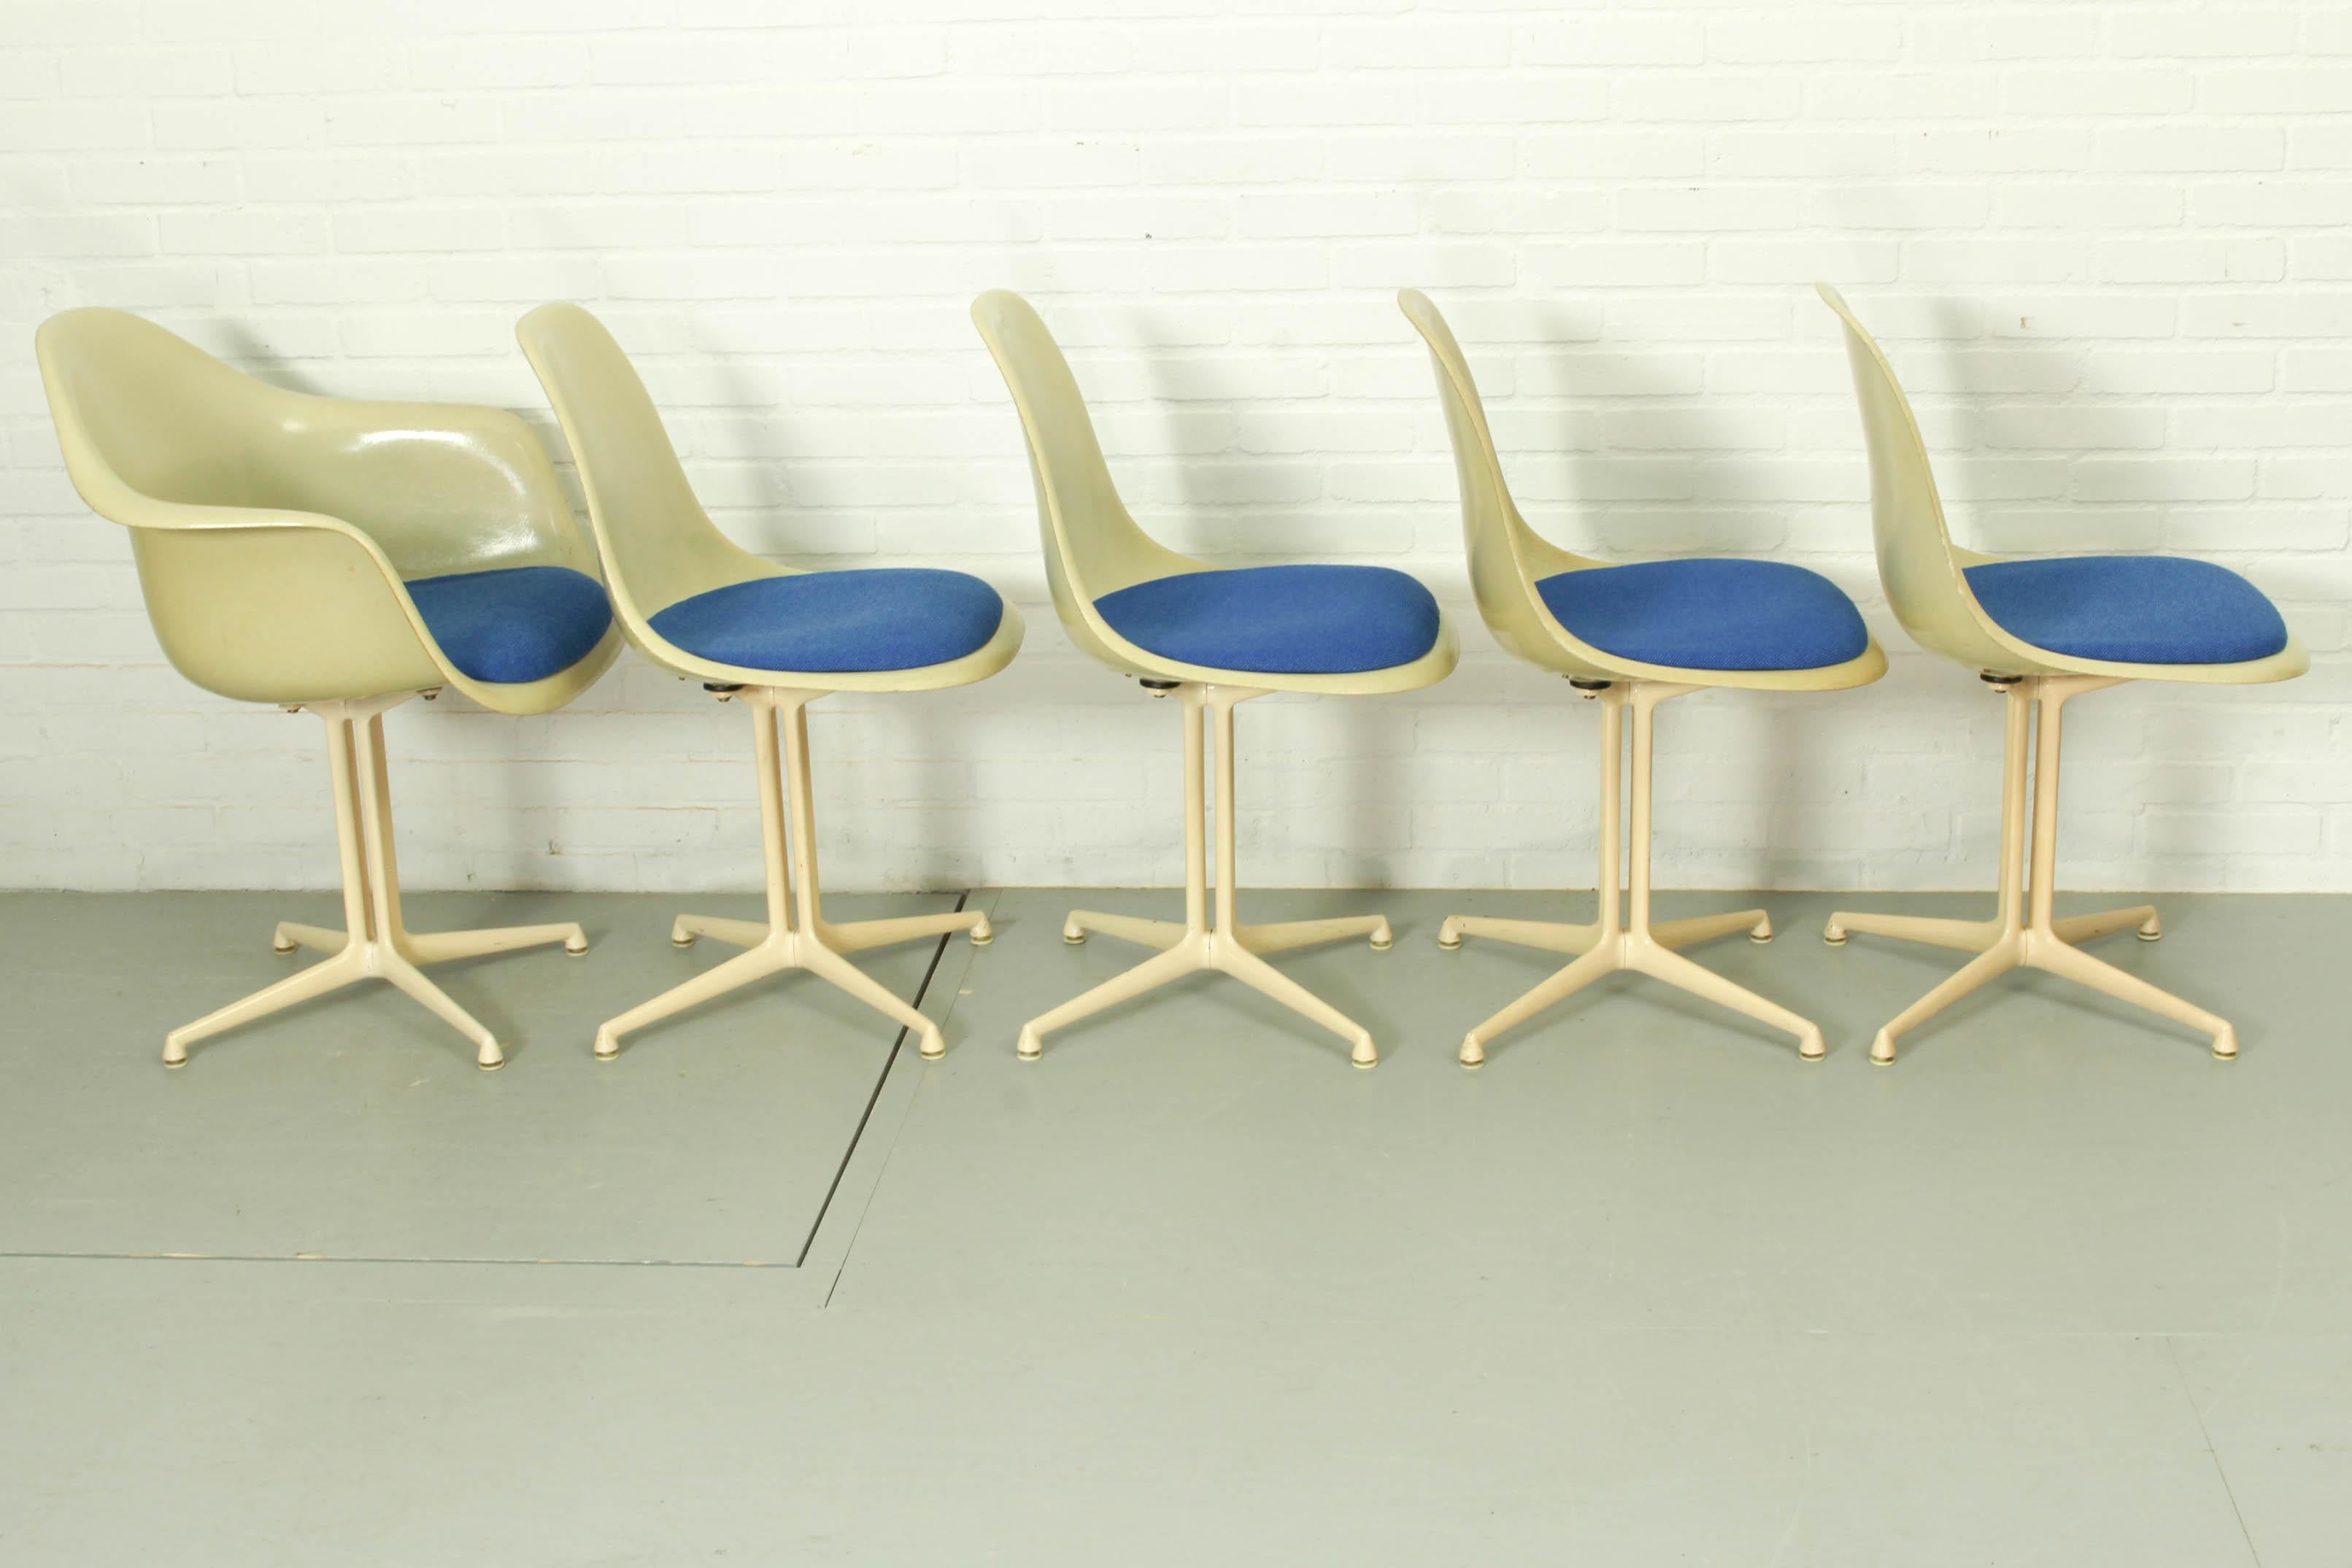 20th Century Set of 4 La Fonda Fiberglass Chairs and 1 La Fonda Fiberglass Armchair, Designed